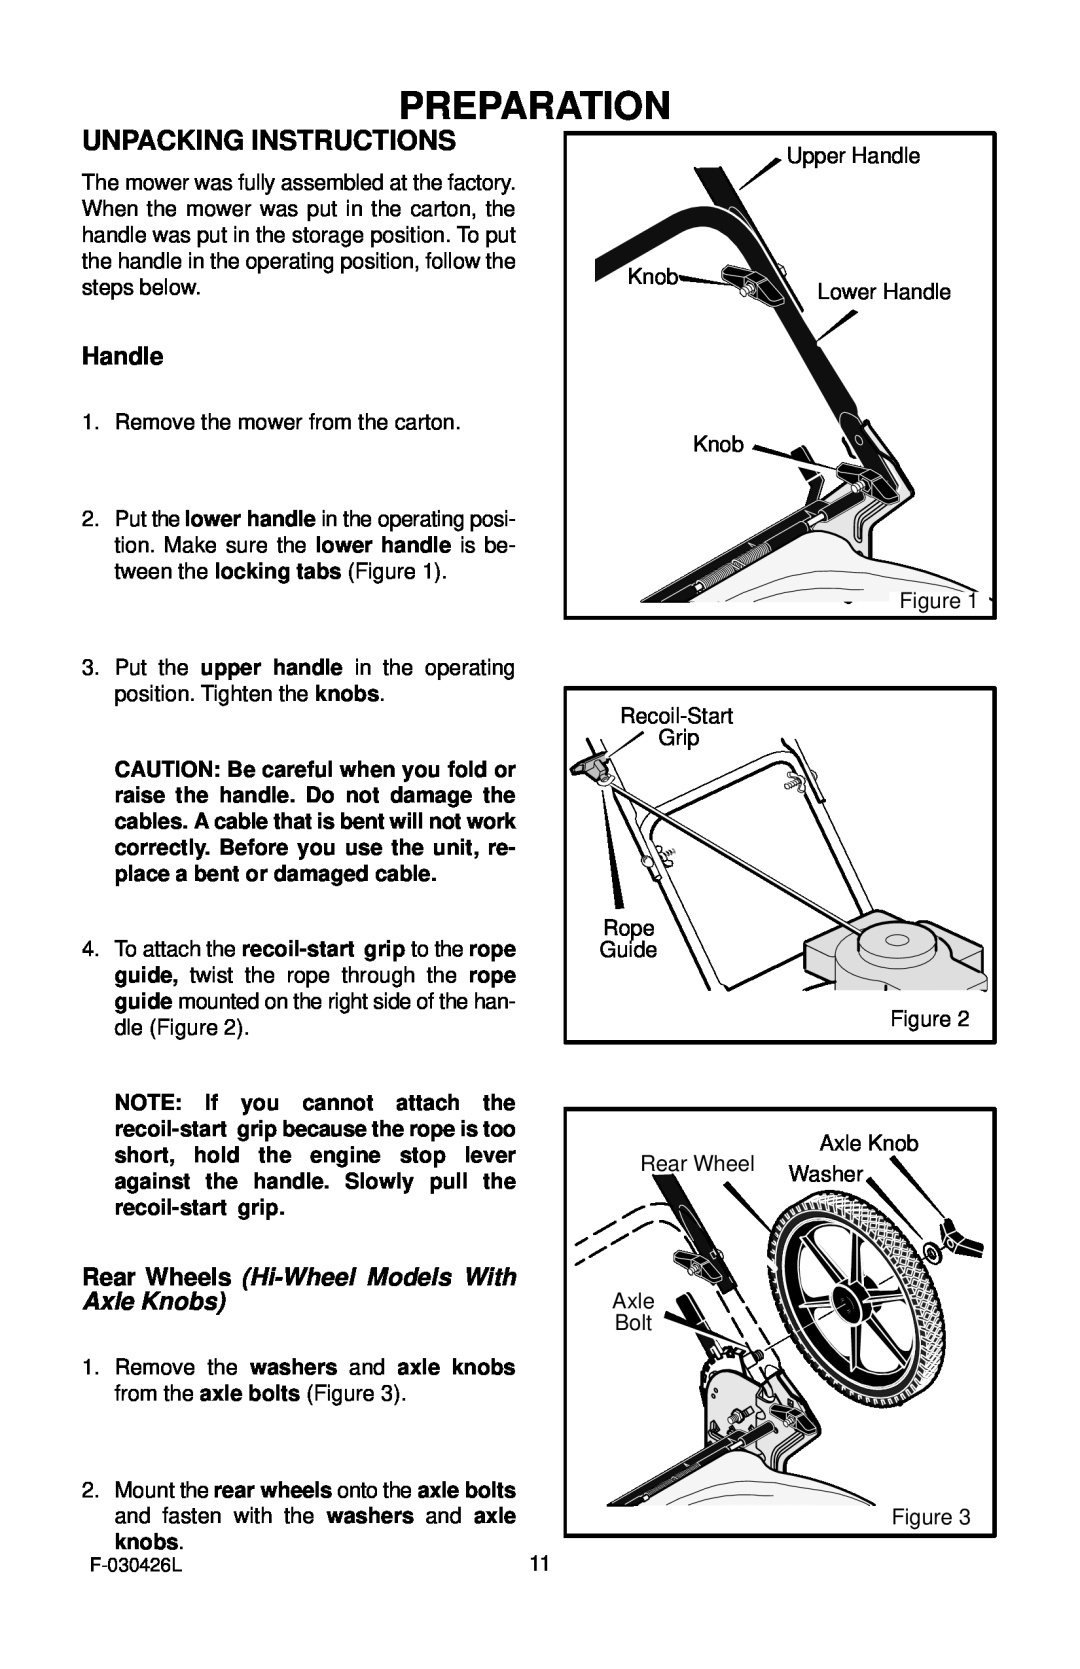 Murray 22" Push manual Preparation, Unpacking Instructions, Rear Wheels Hi-Wheel Models With Axle Knobs 